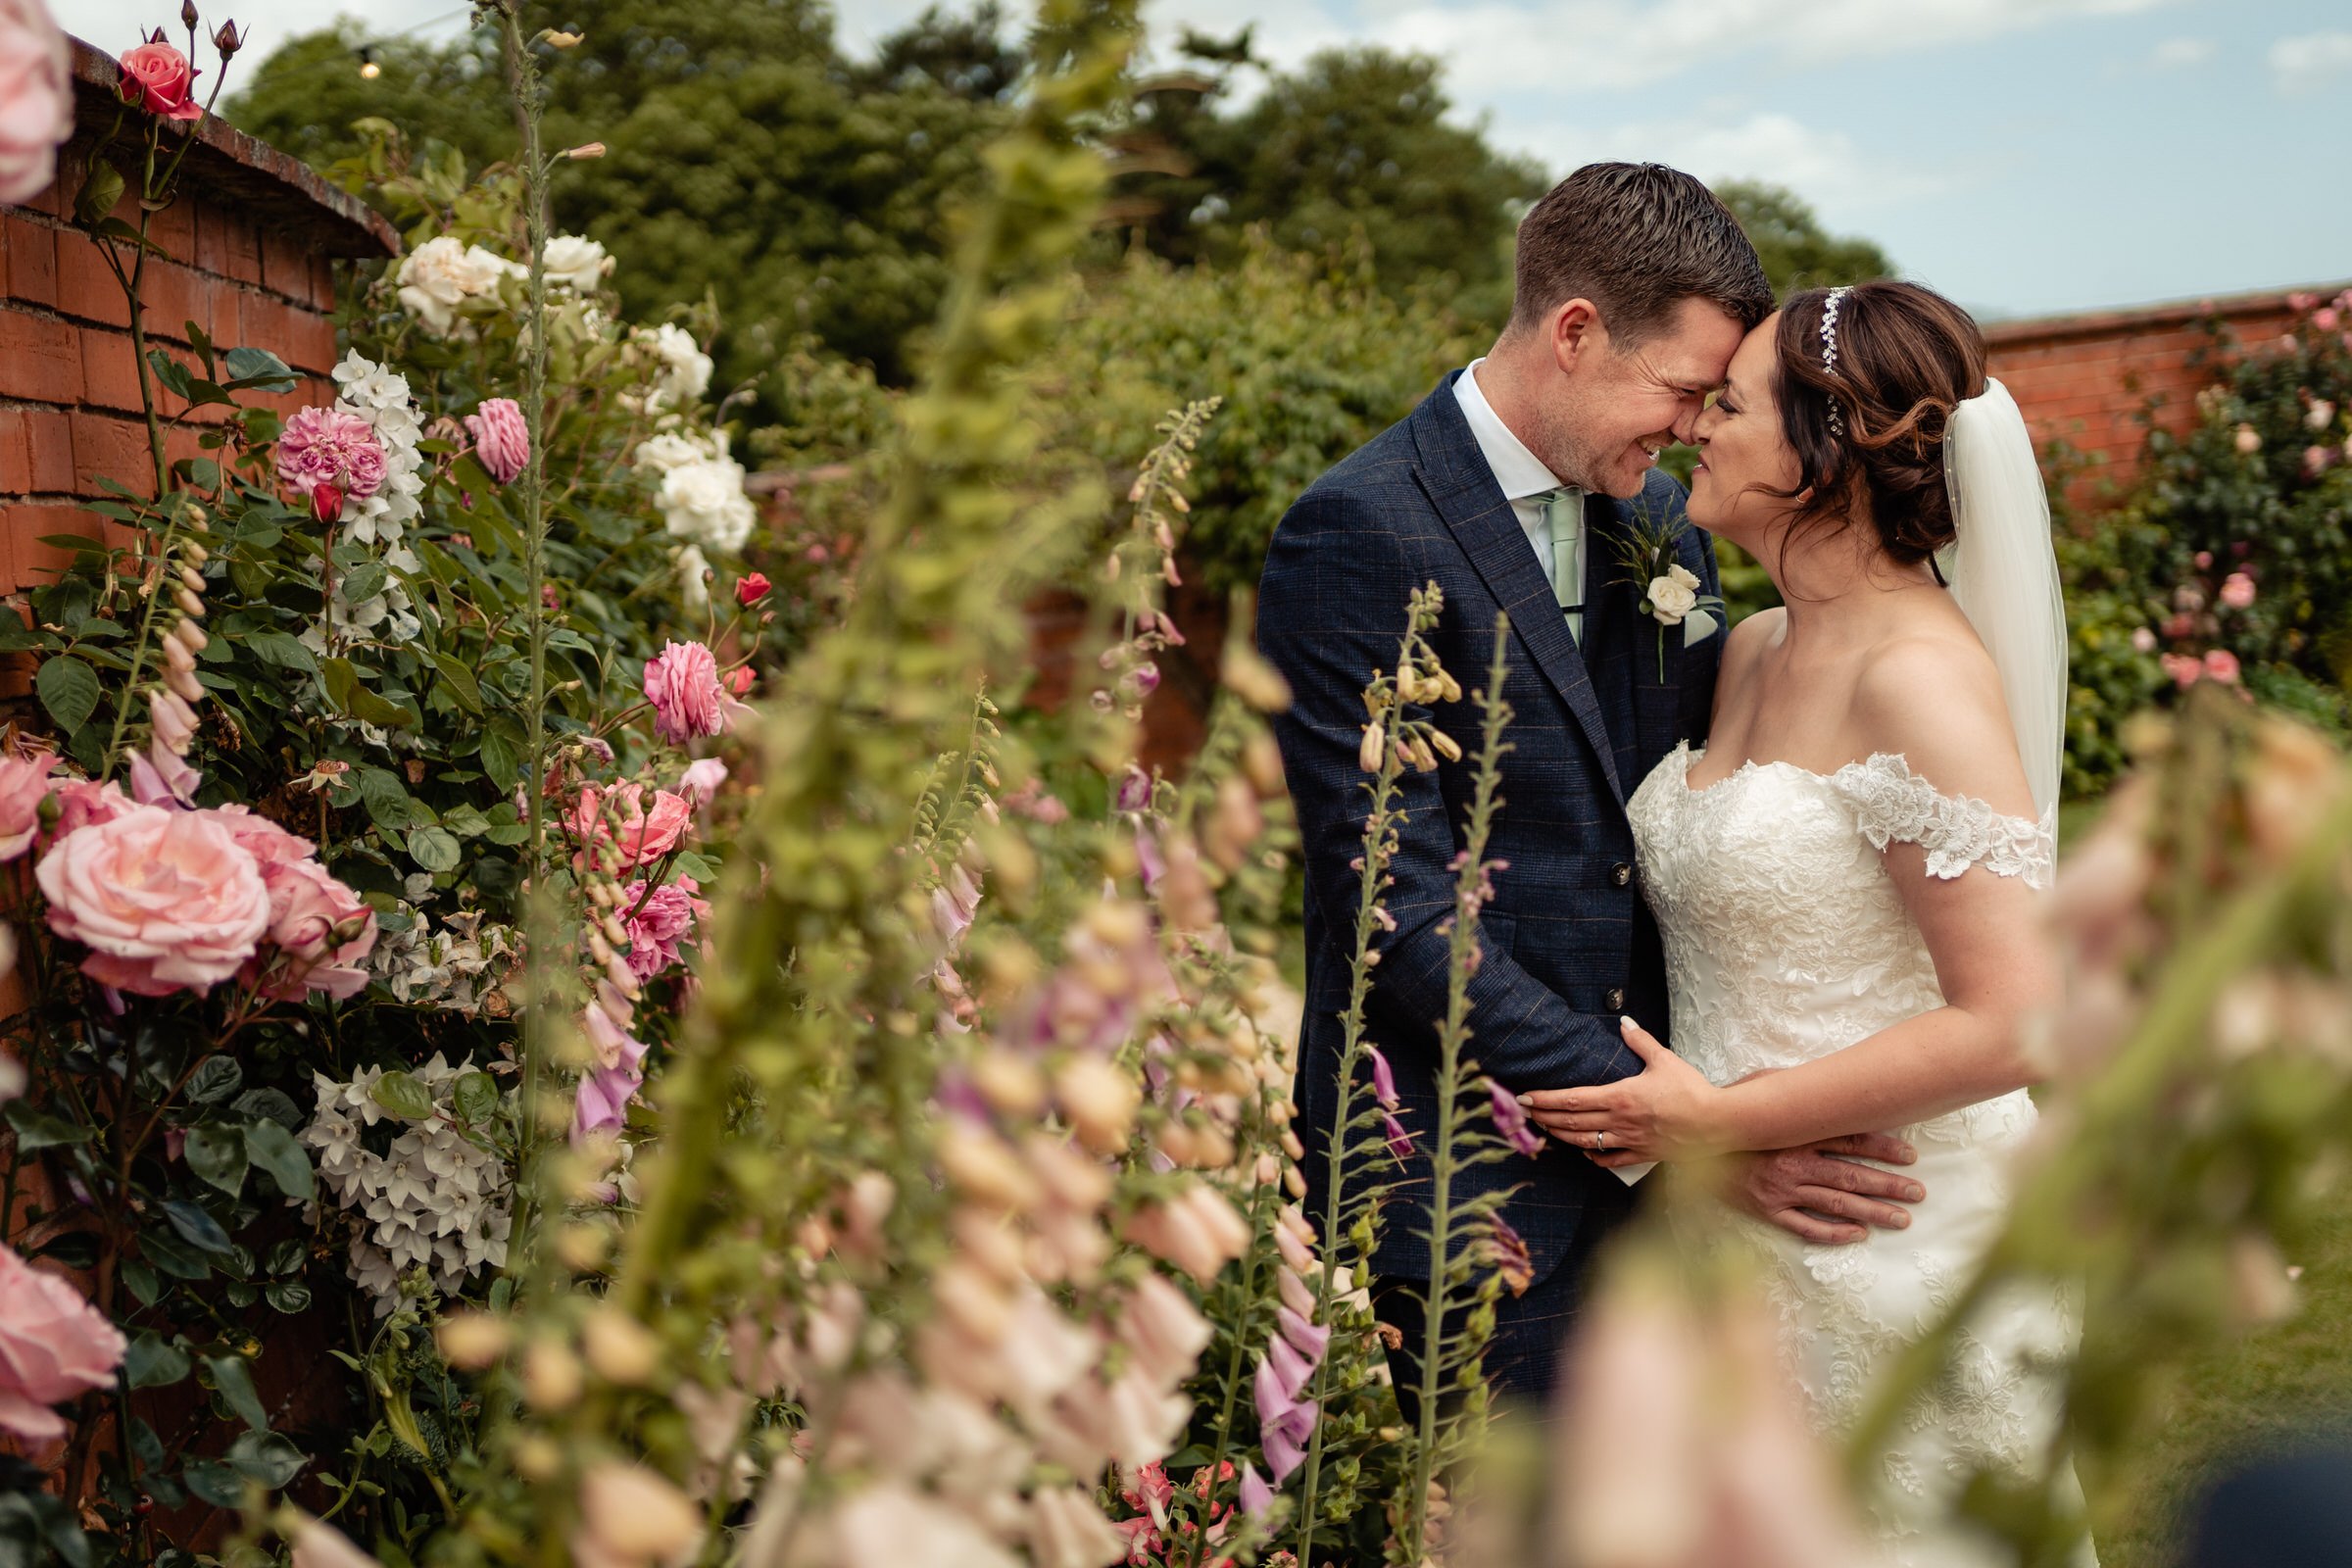 upton barn - wedding - flowers - bride - groom.jpg